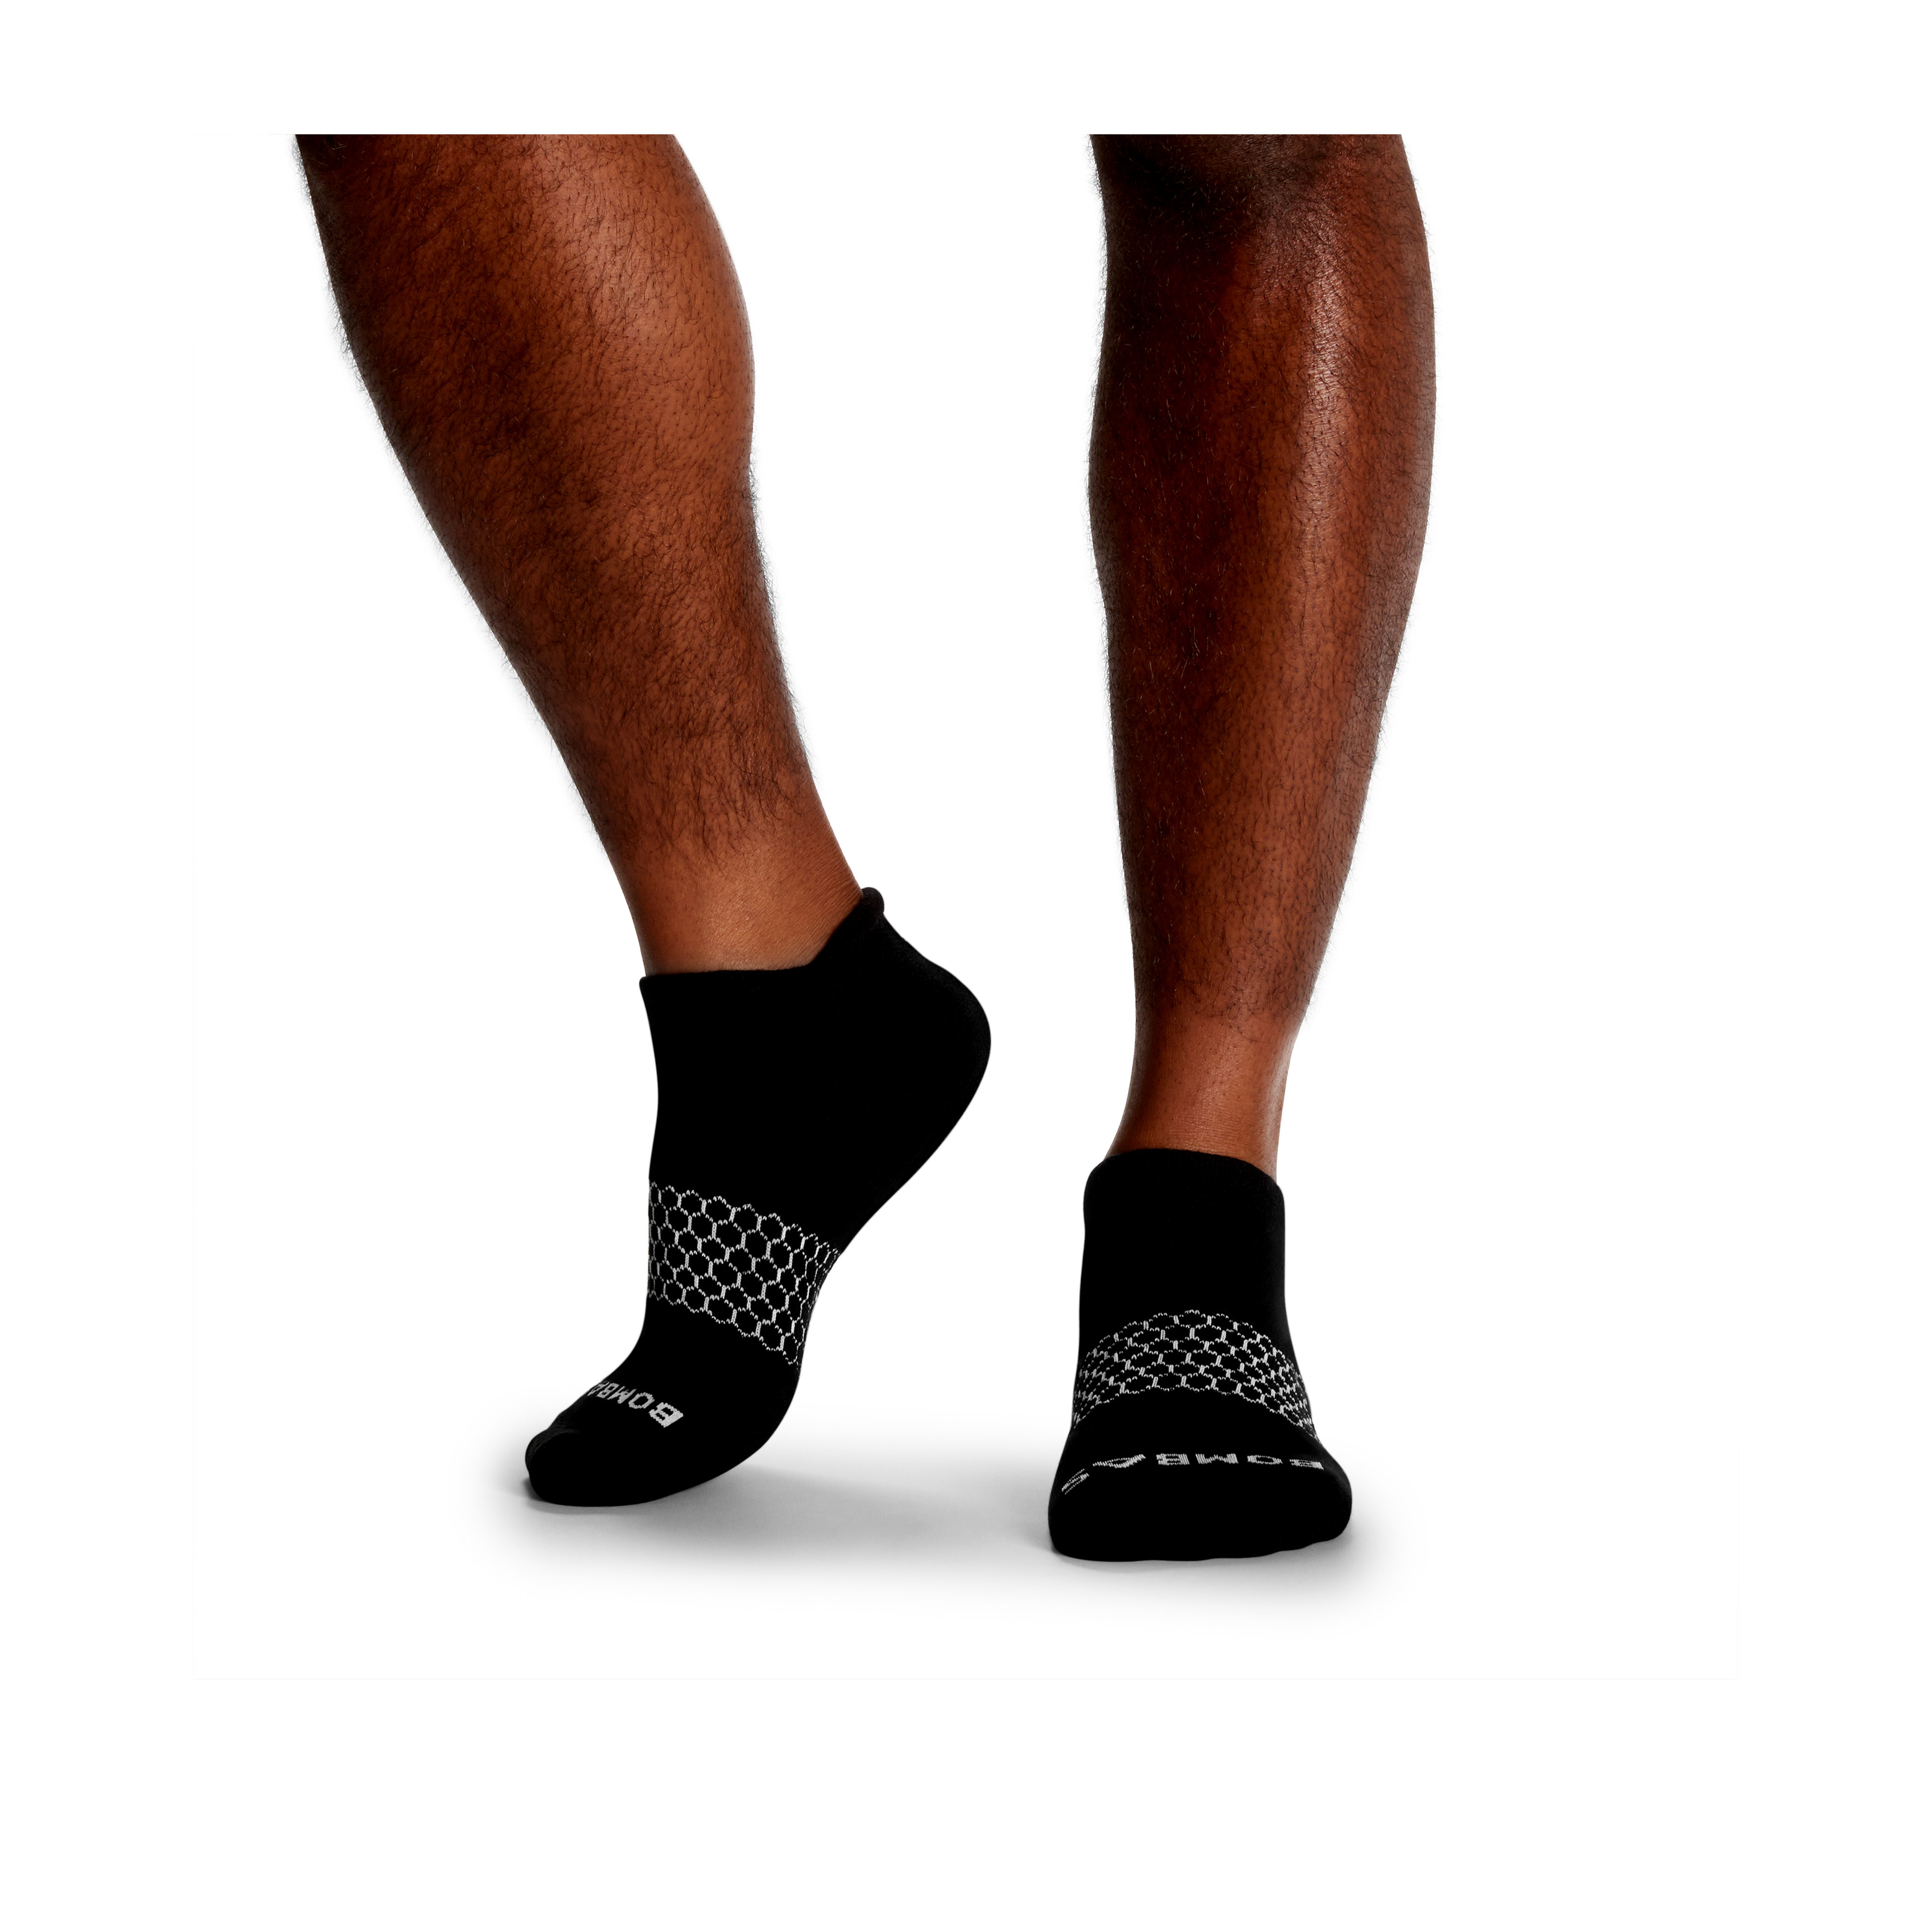 Men's Performance RS Ankle Socks - Black (4 Pack) – Piloti